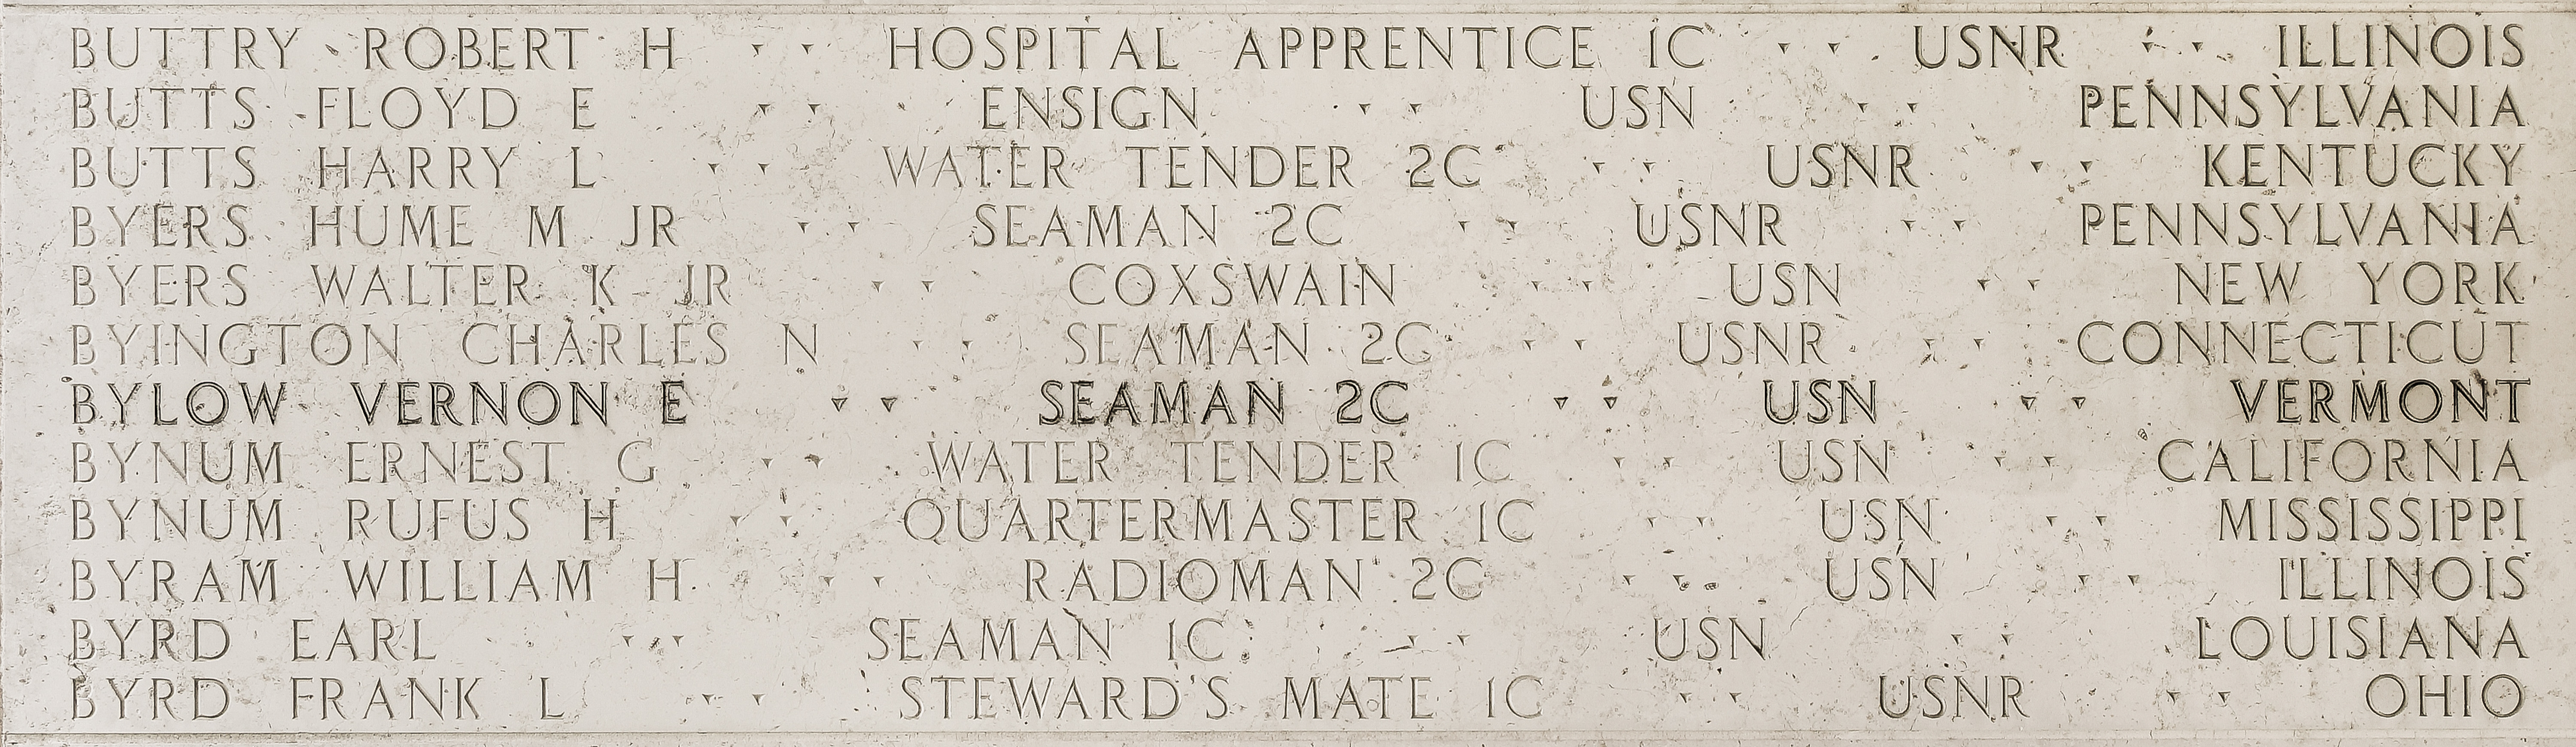 William H. Byram, Radioman Second Class